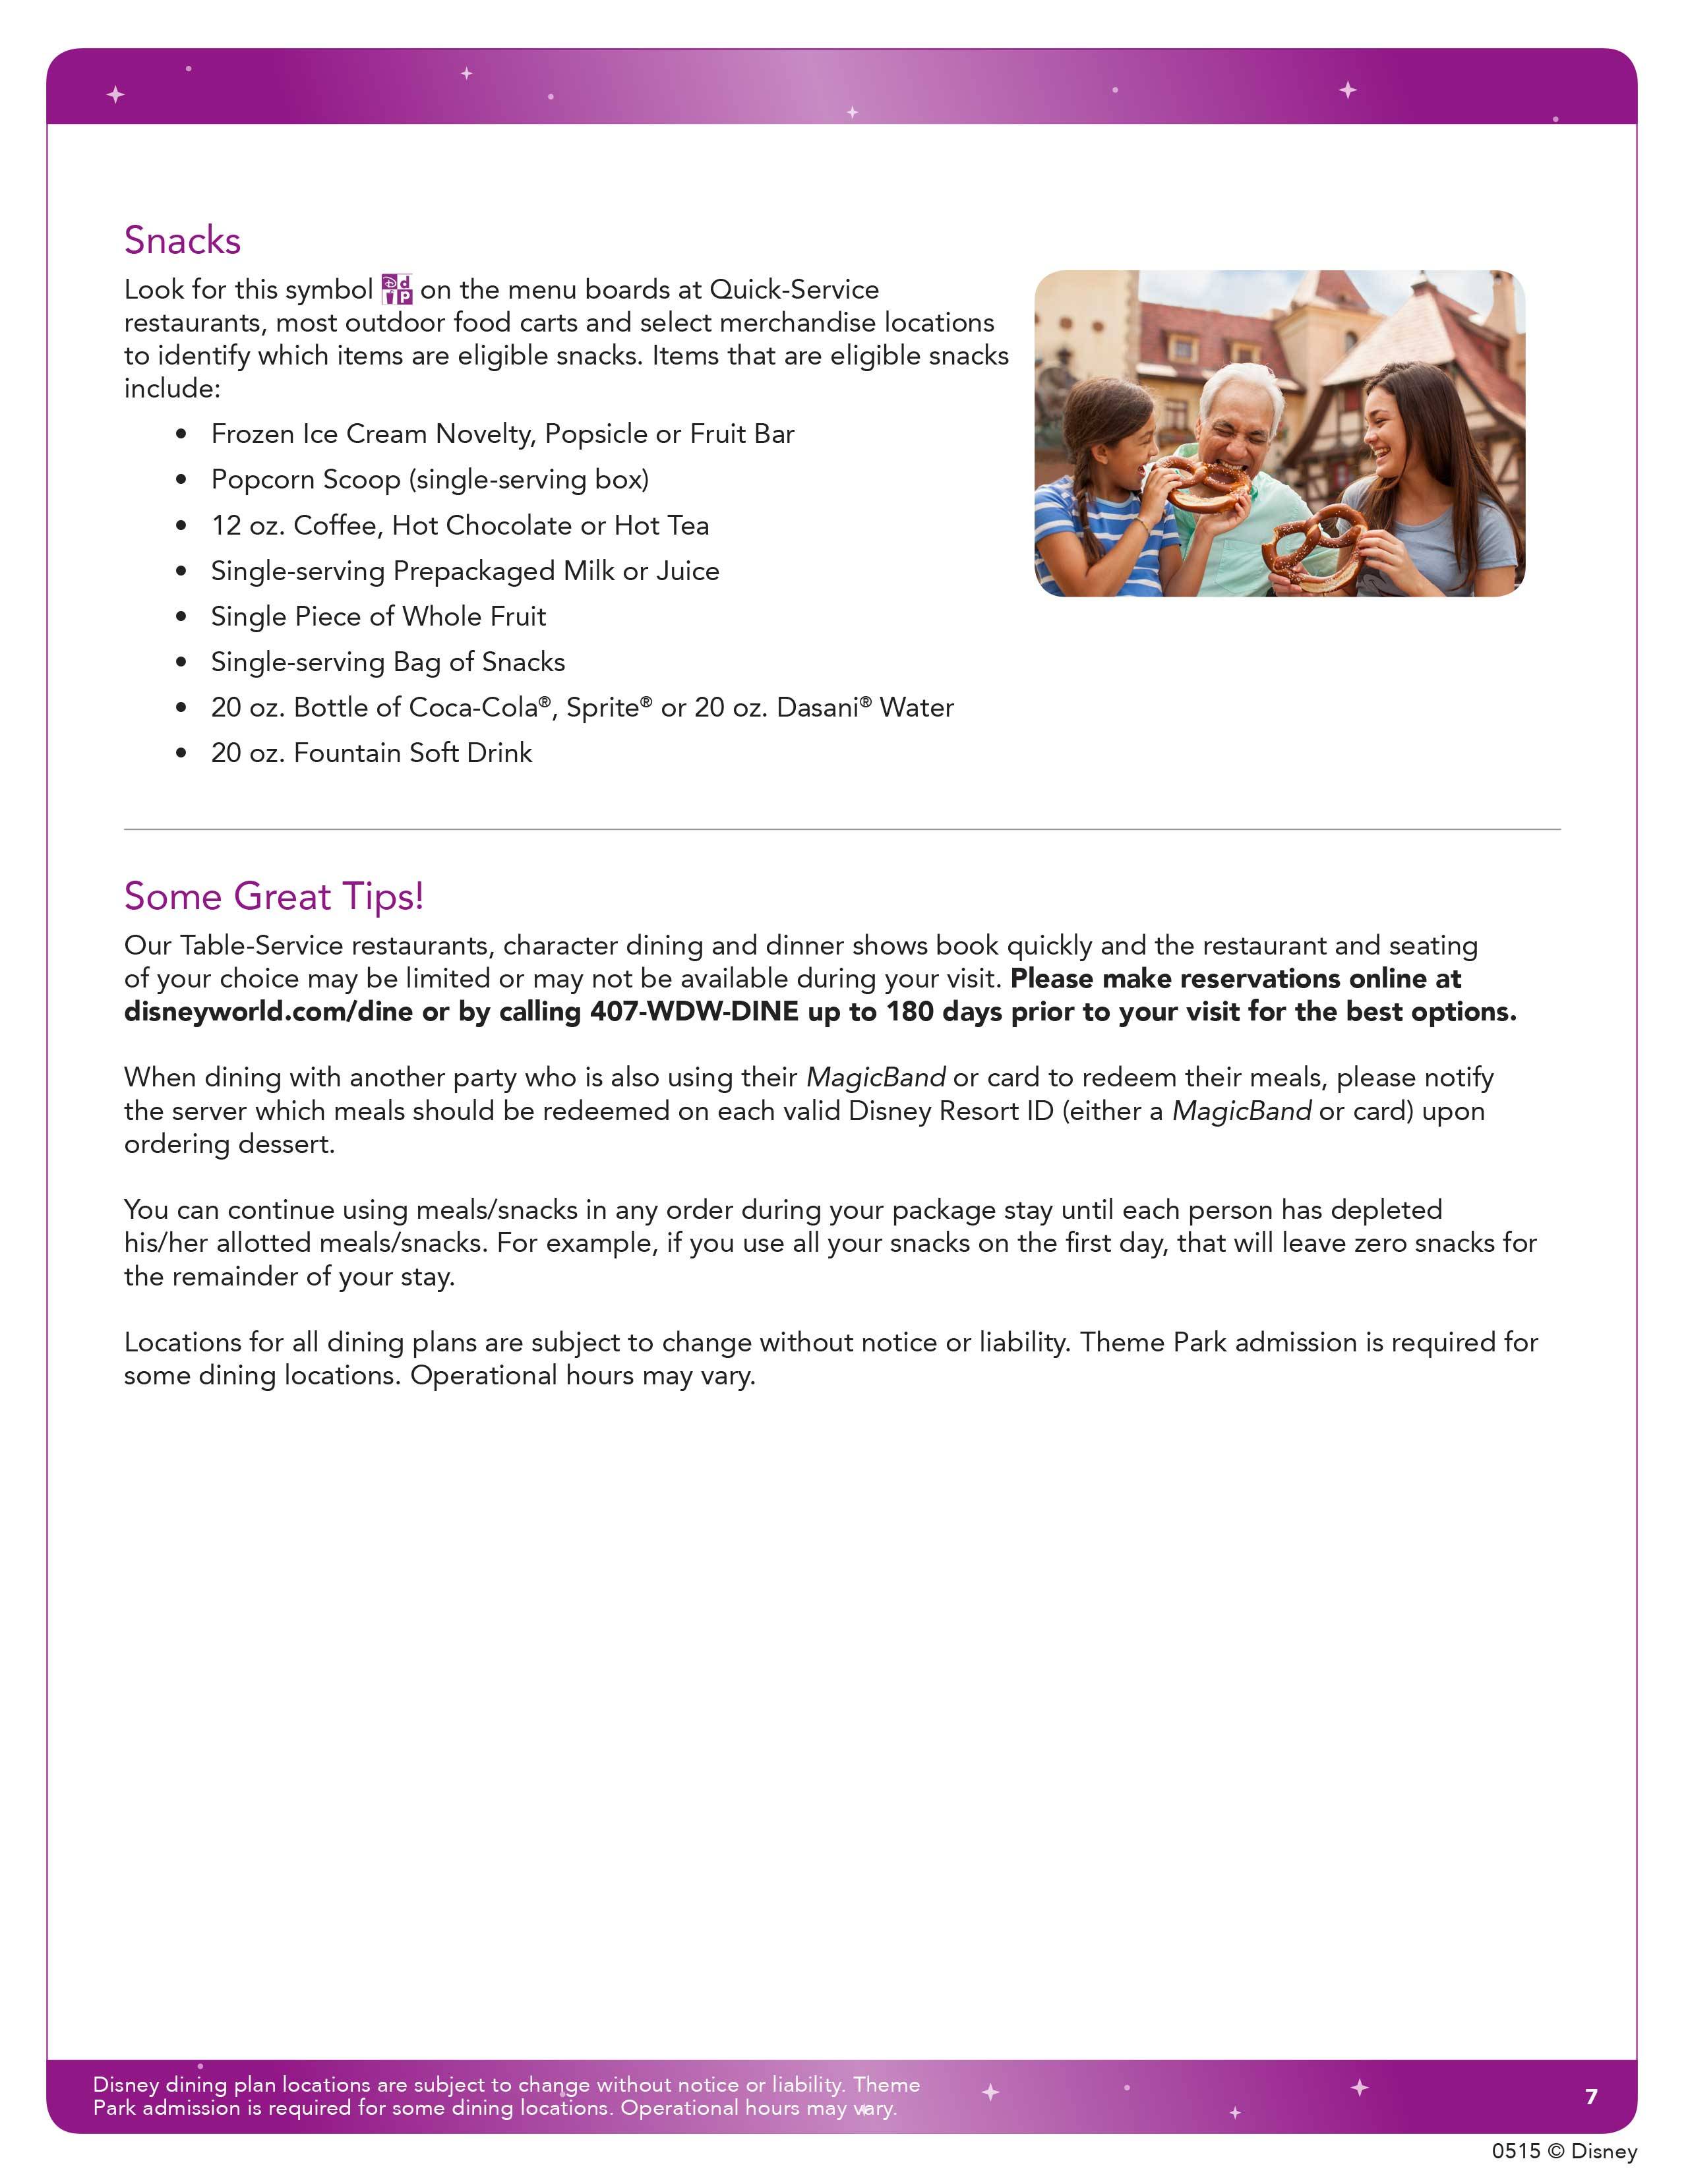 2016 Disney Dining Plan brochure - Page 7